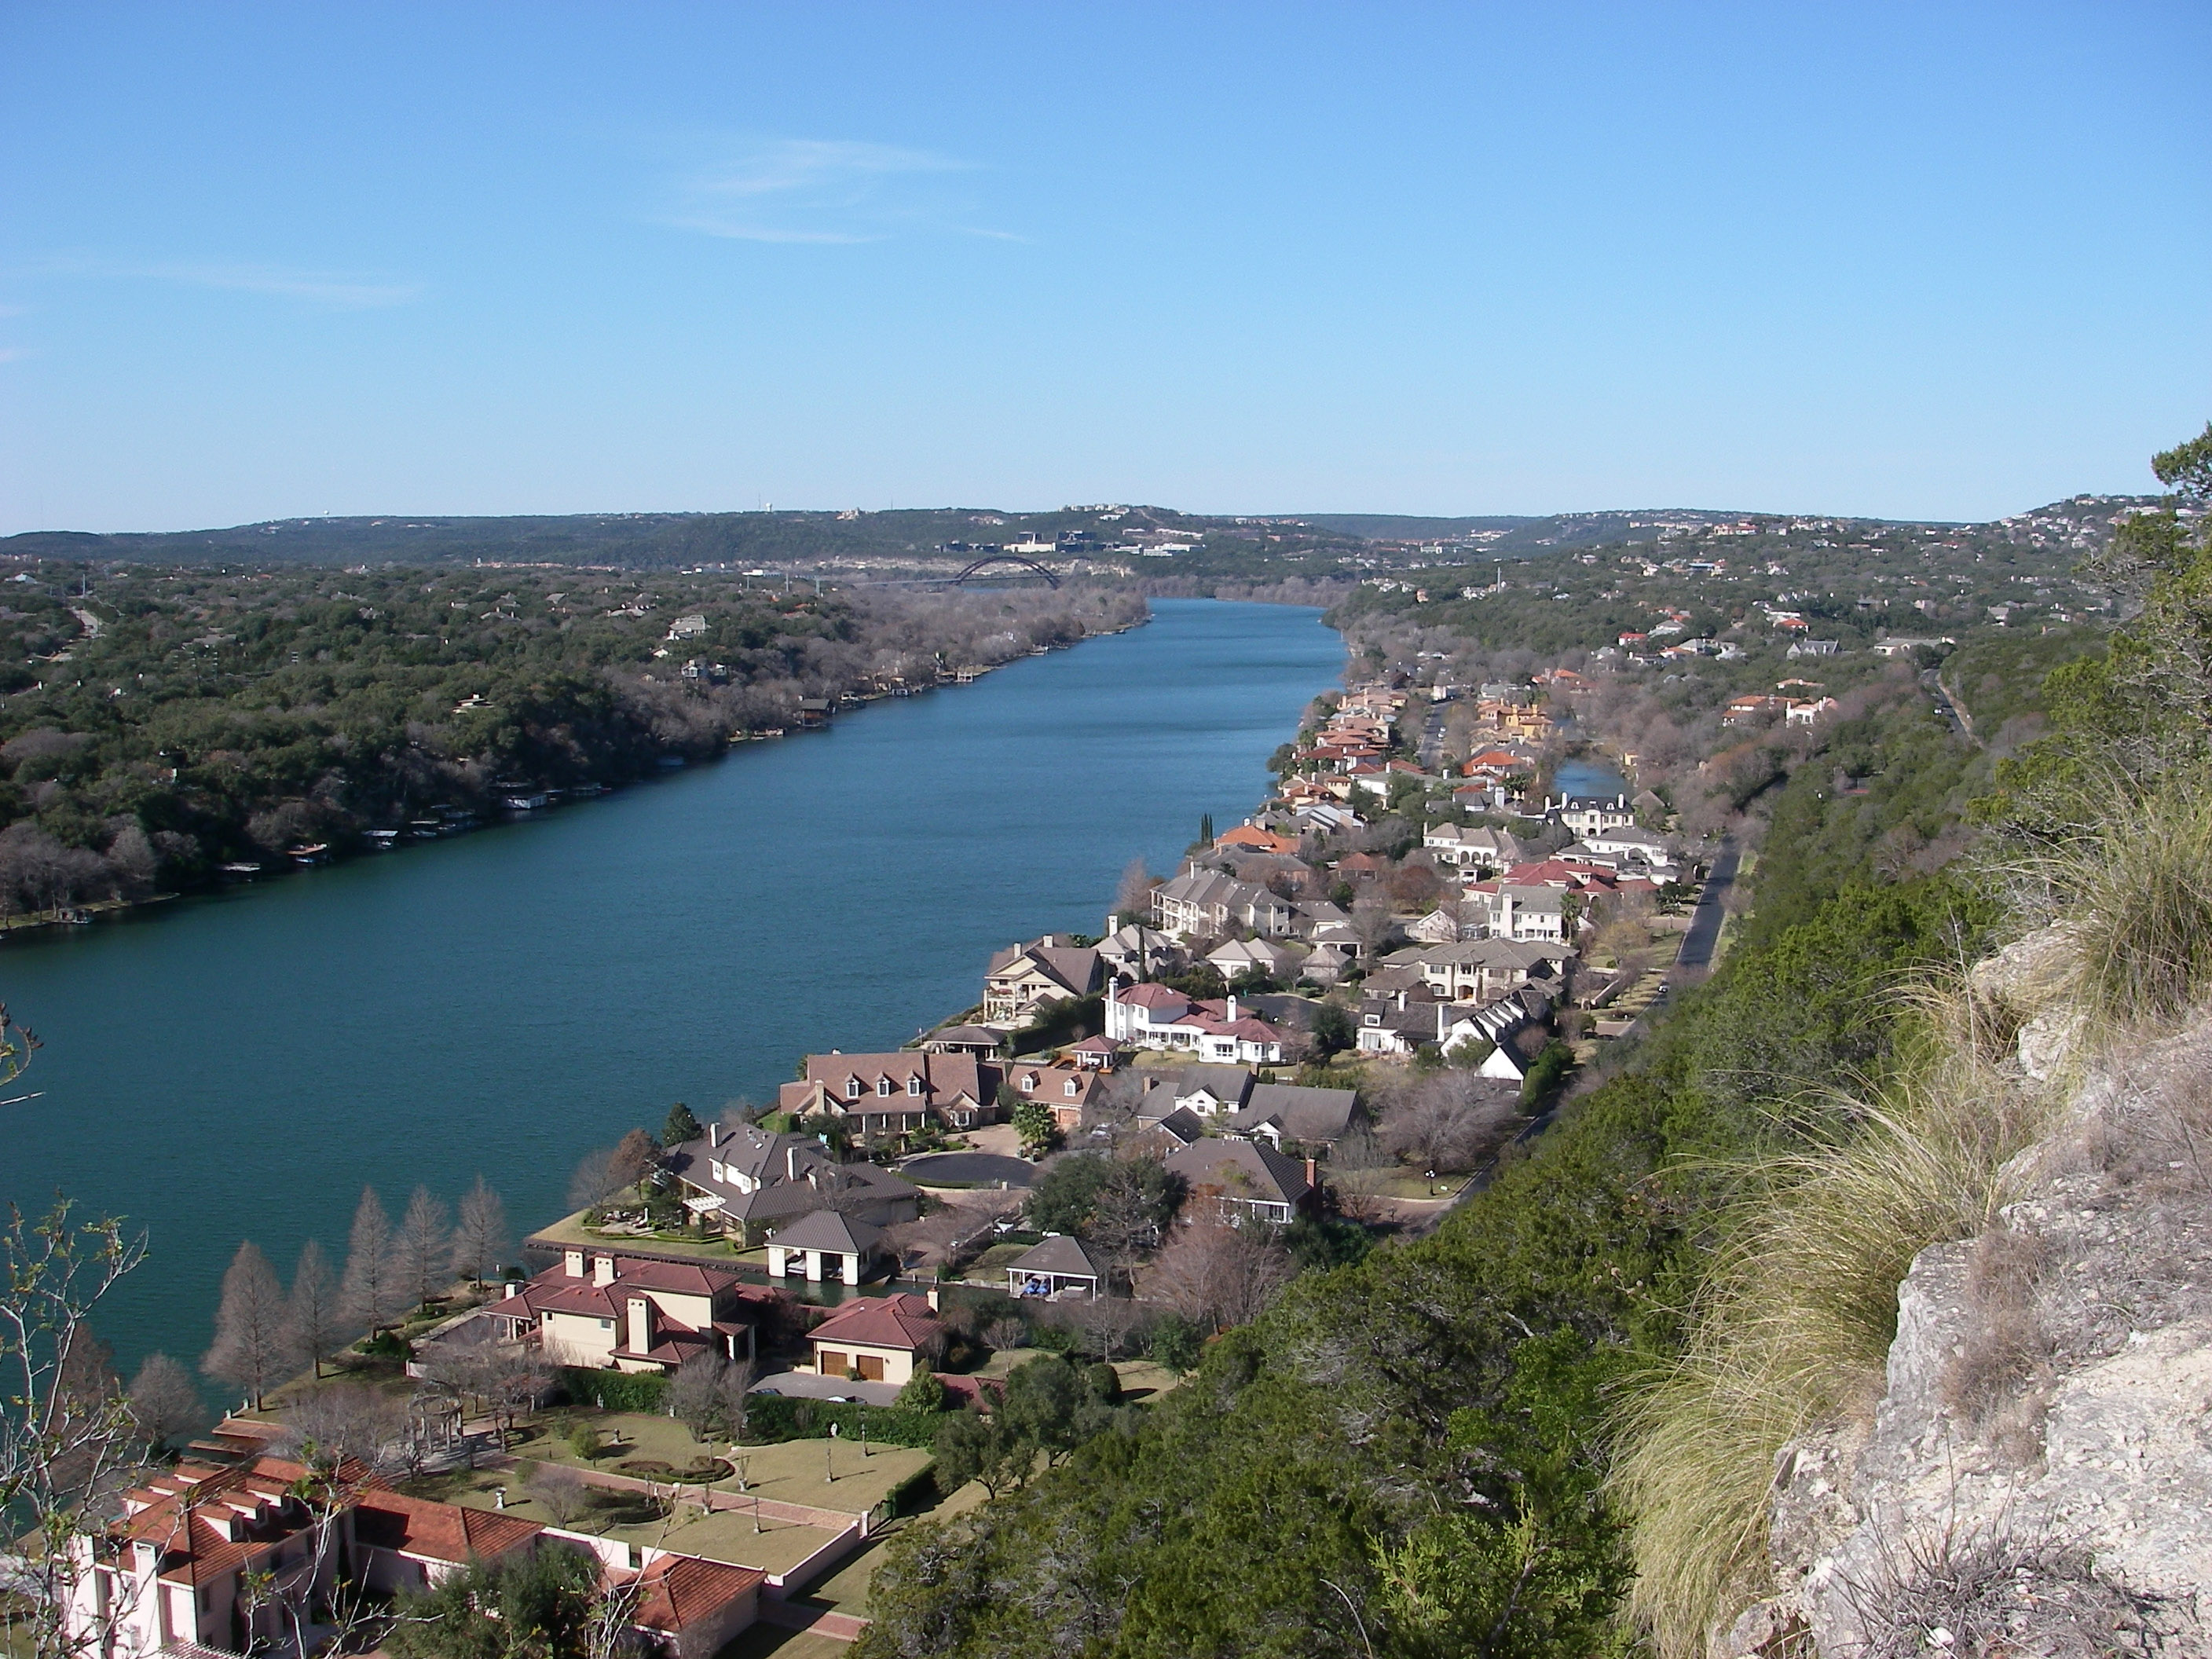 Landscape and City of Lake Austin, Texas image - Free stock photo